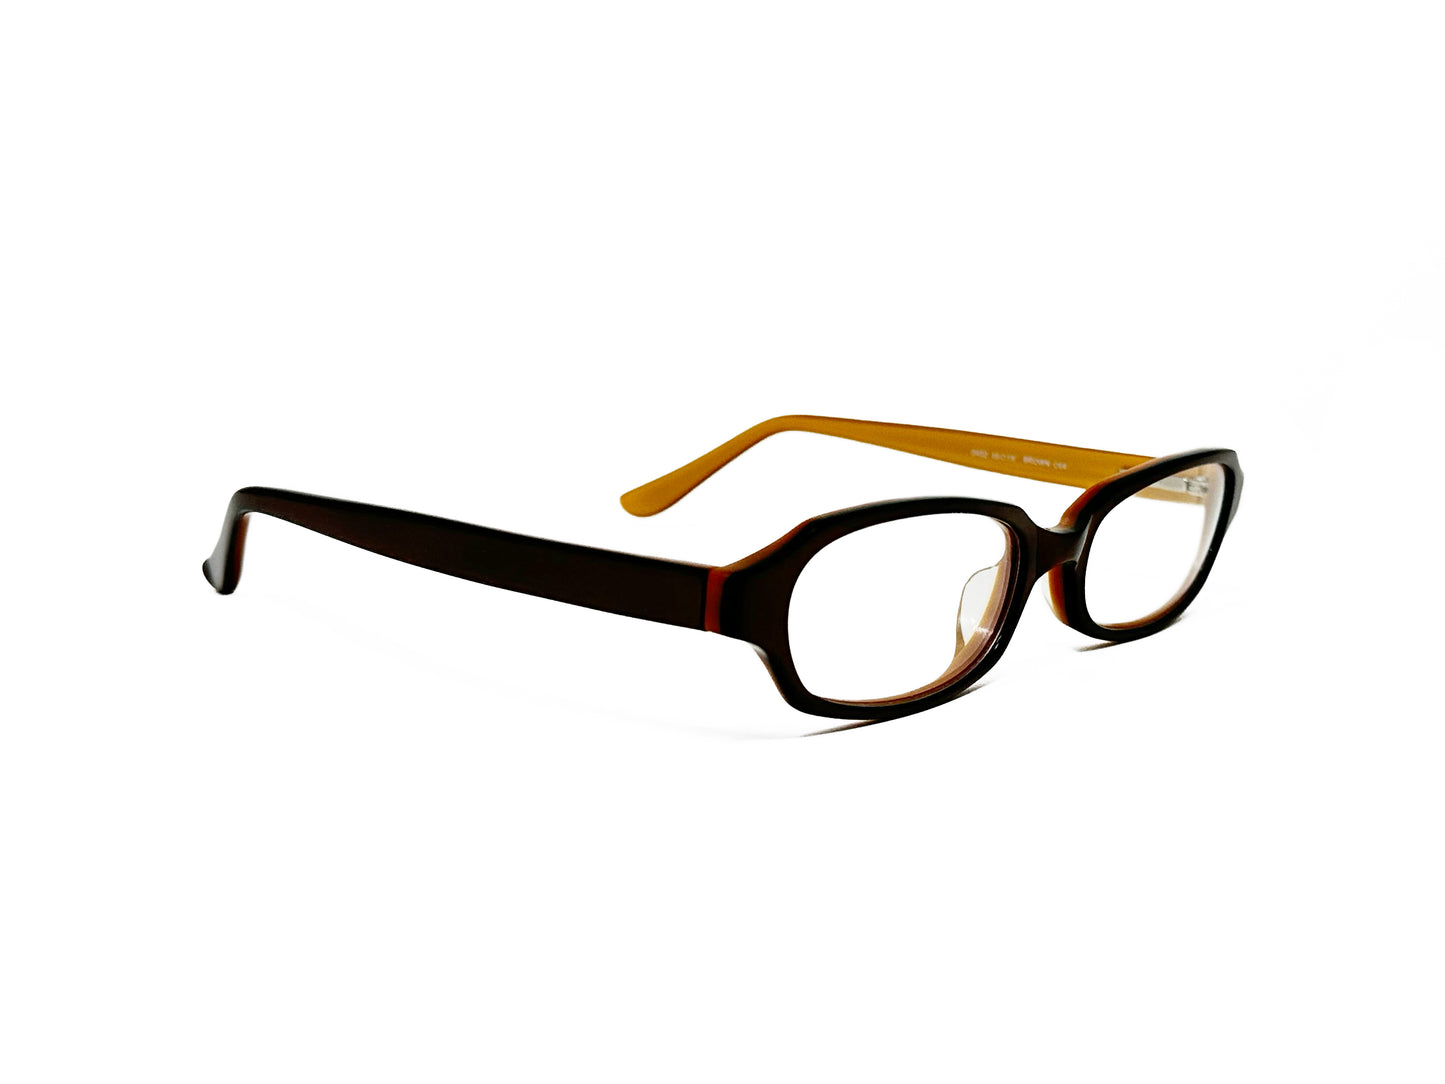 Bela Vista rouned-rectangular, acetate, optical frame. Model: 0402. Color: Brown C64. Side view.